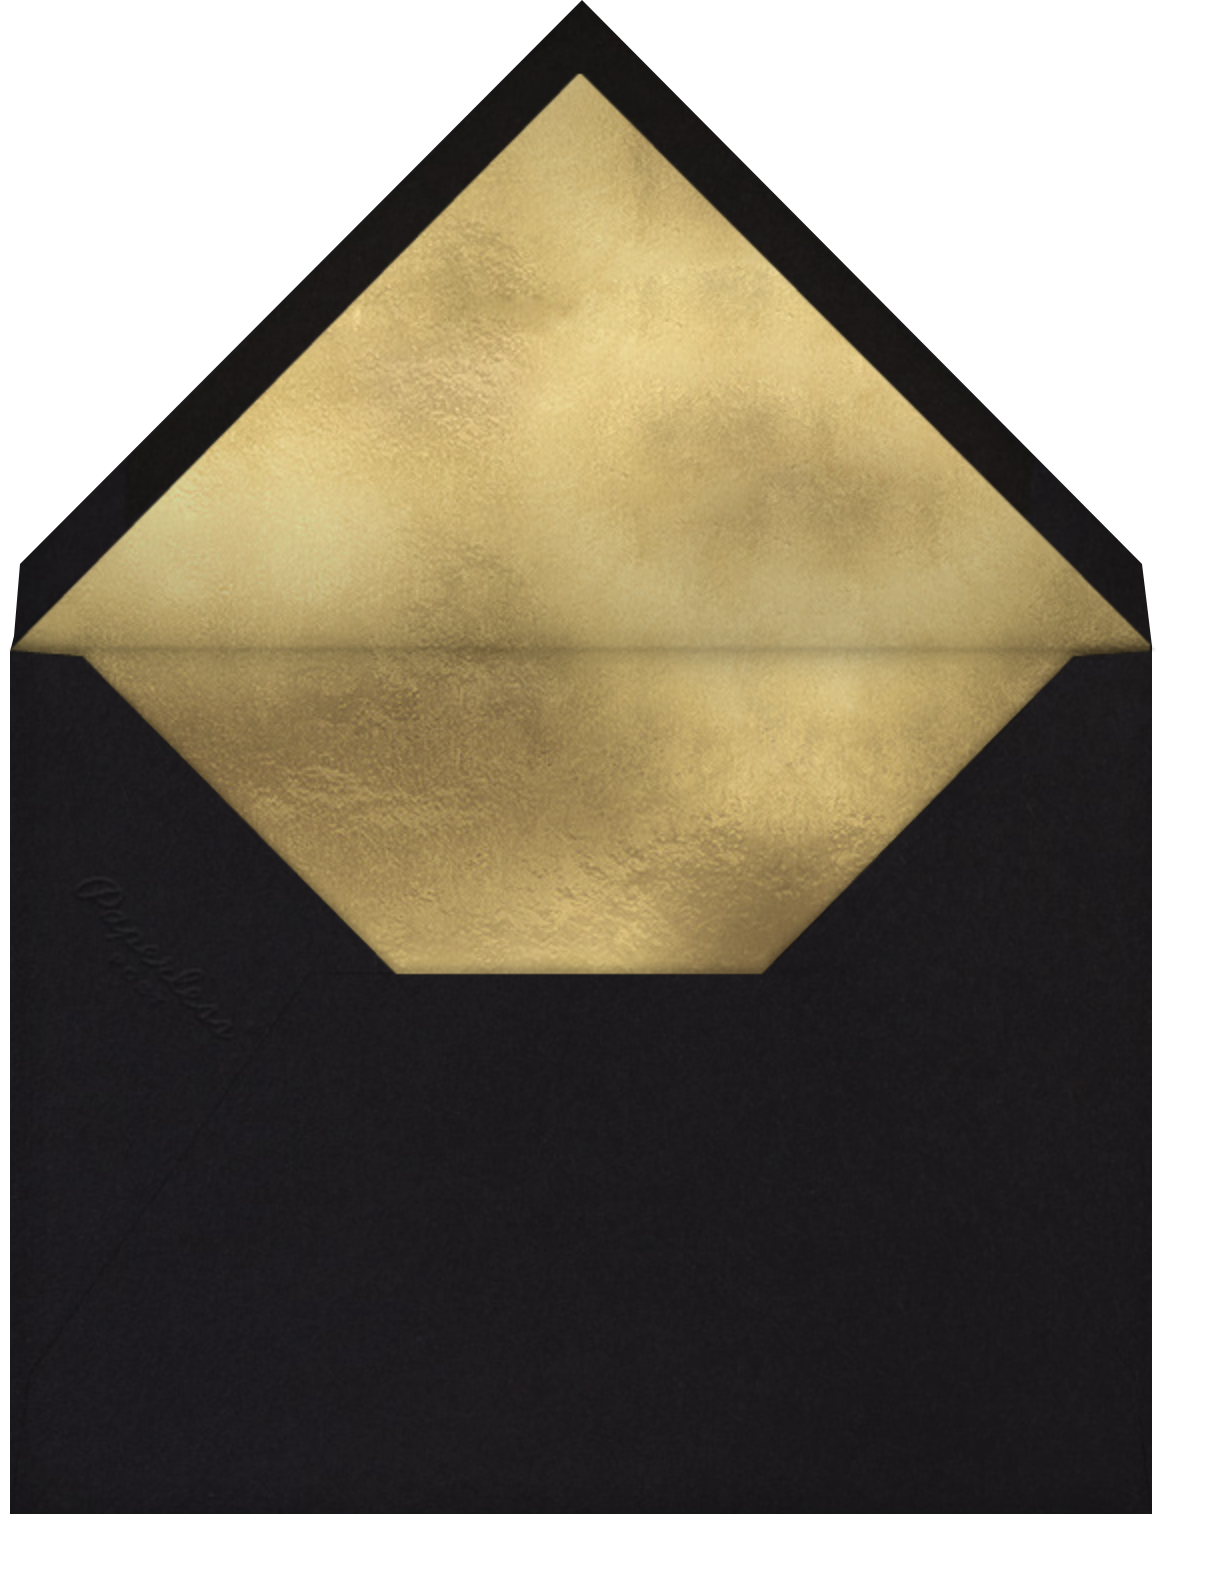 2022 Vision - Black - Paperless Post - Envelope